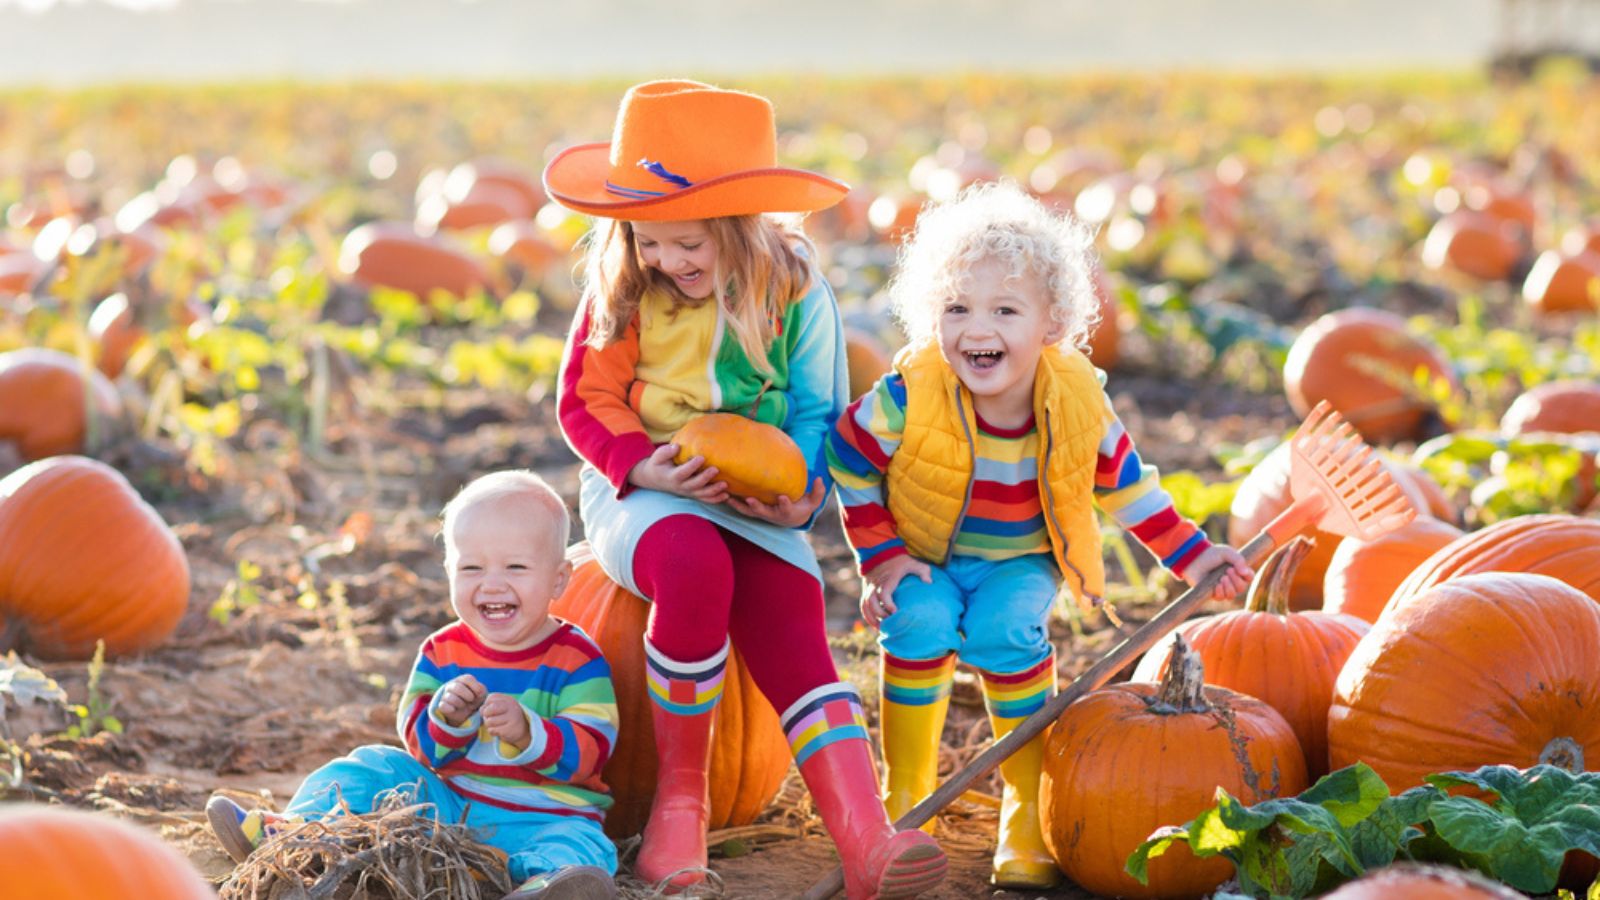 Kids playing in a San Antonio pumpkin patch.